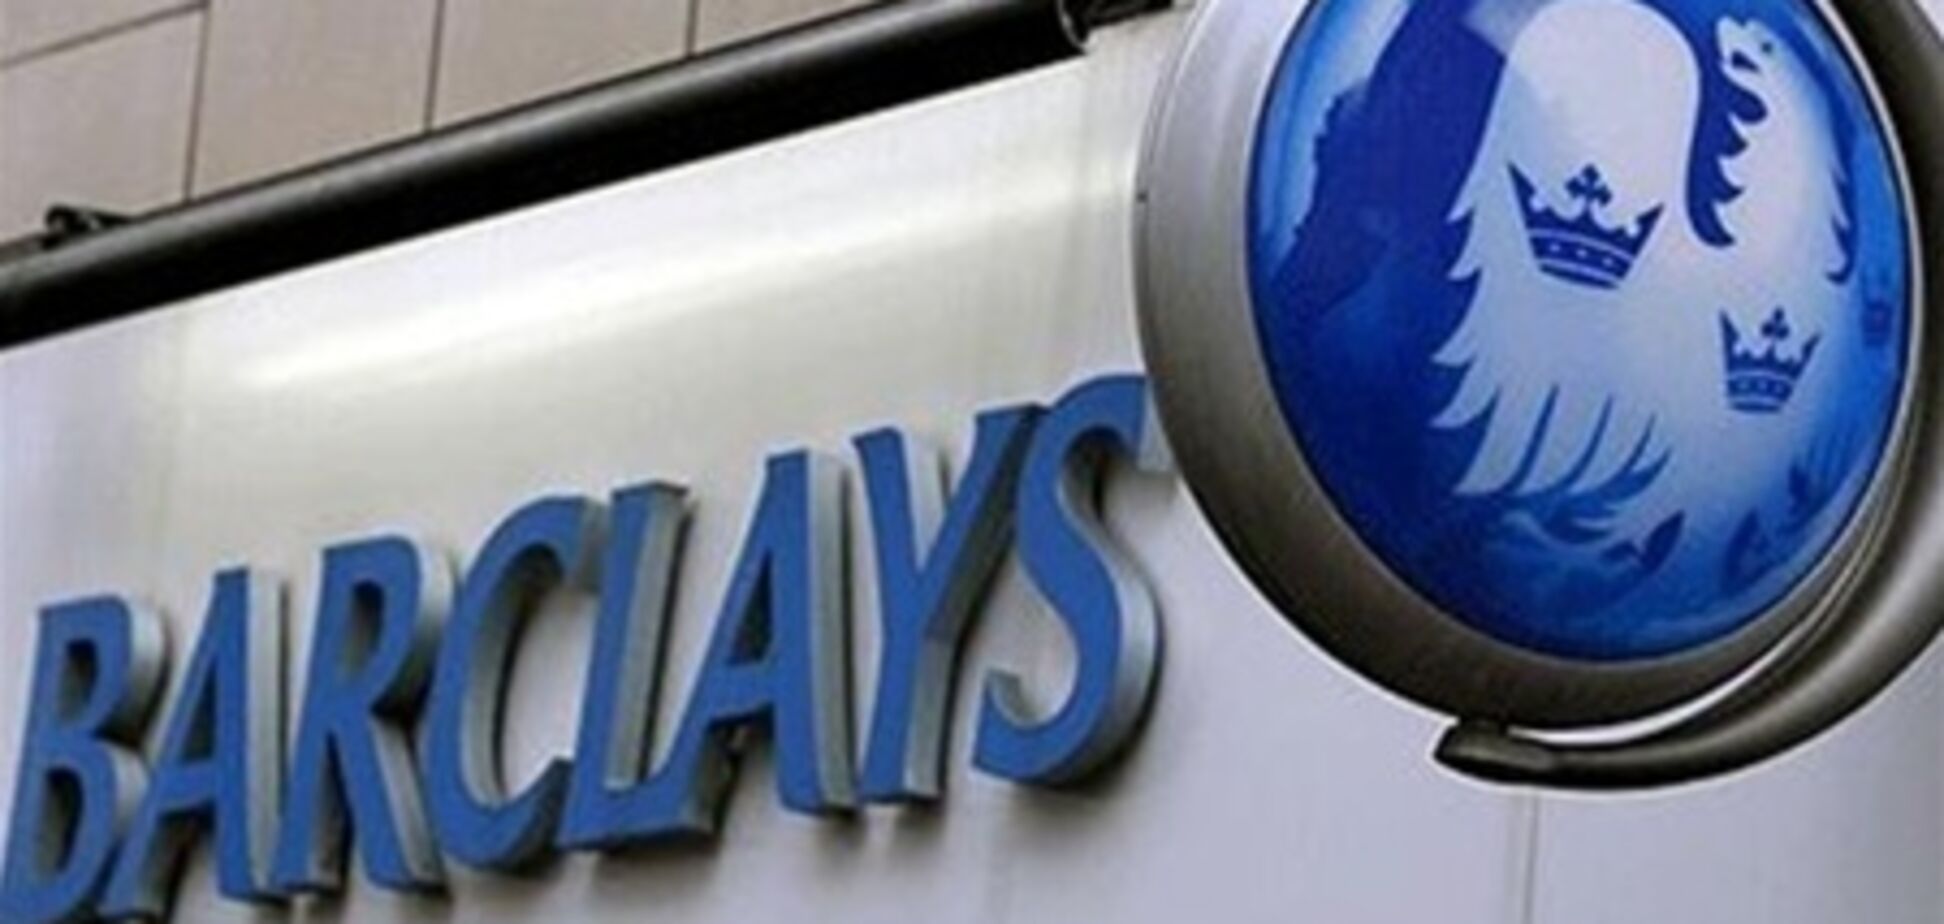 Barclays оштрафовали за манипуляции